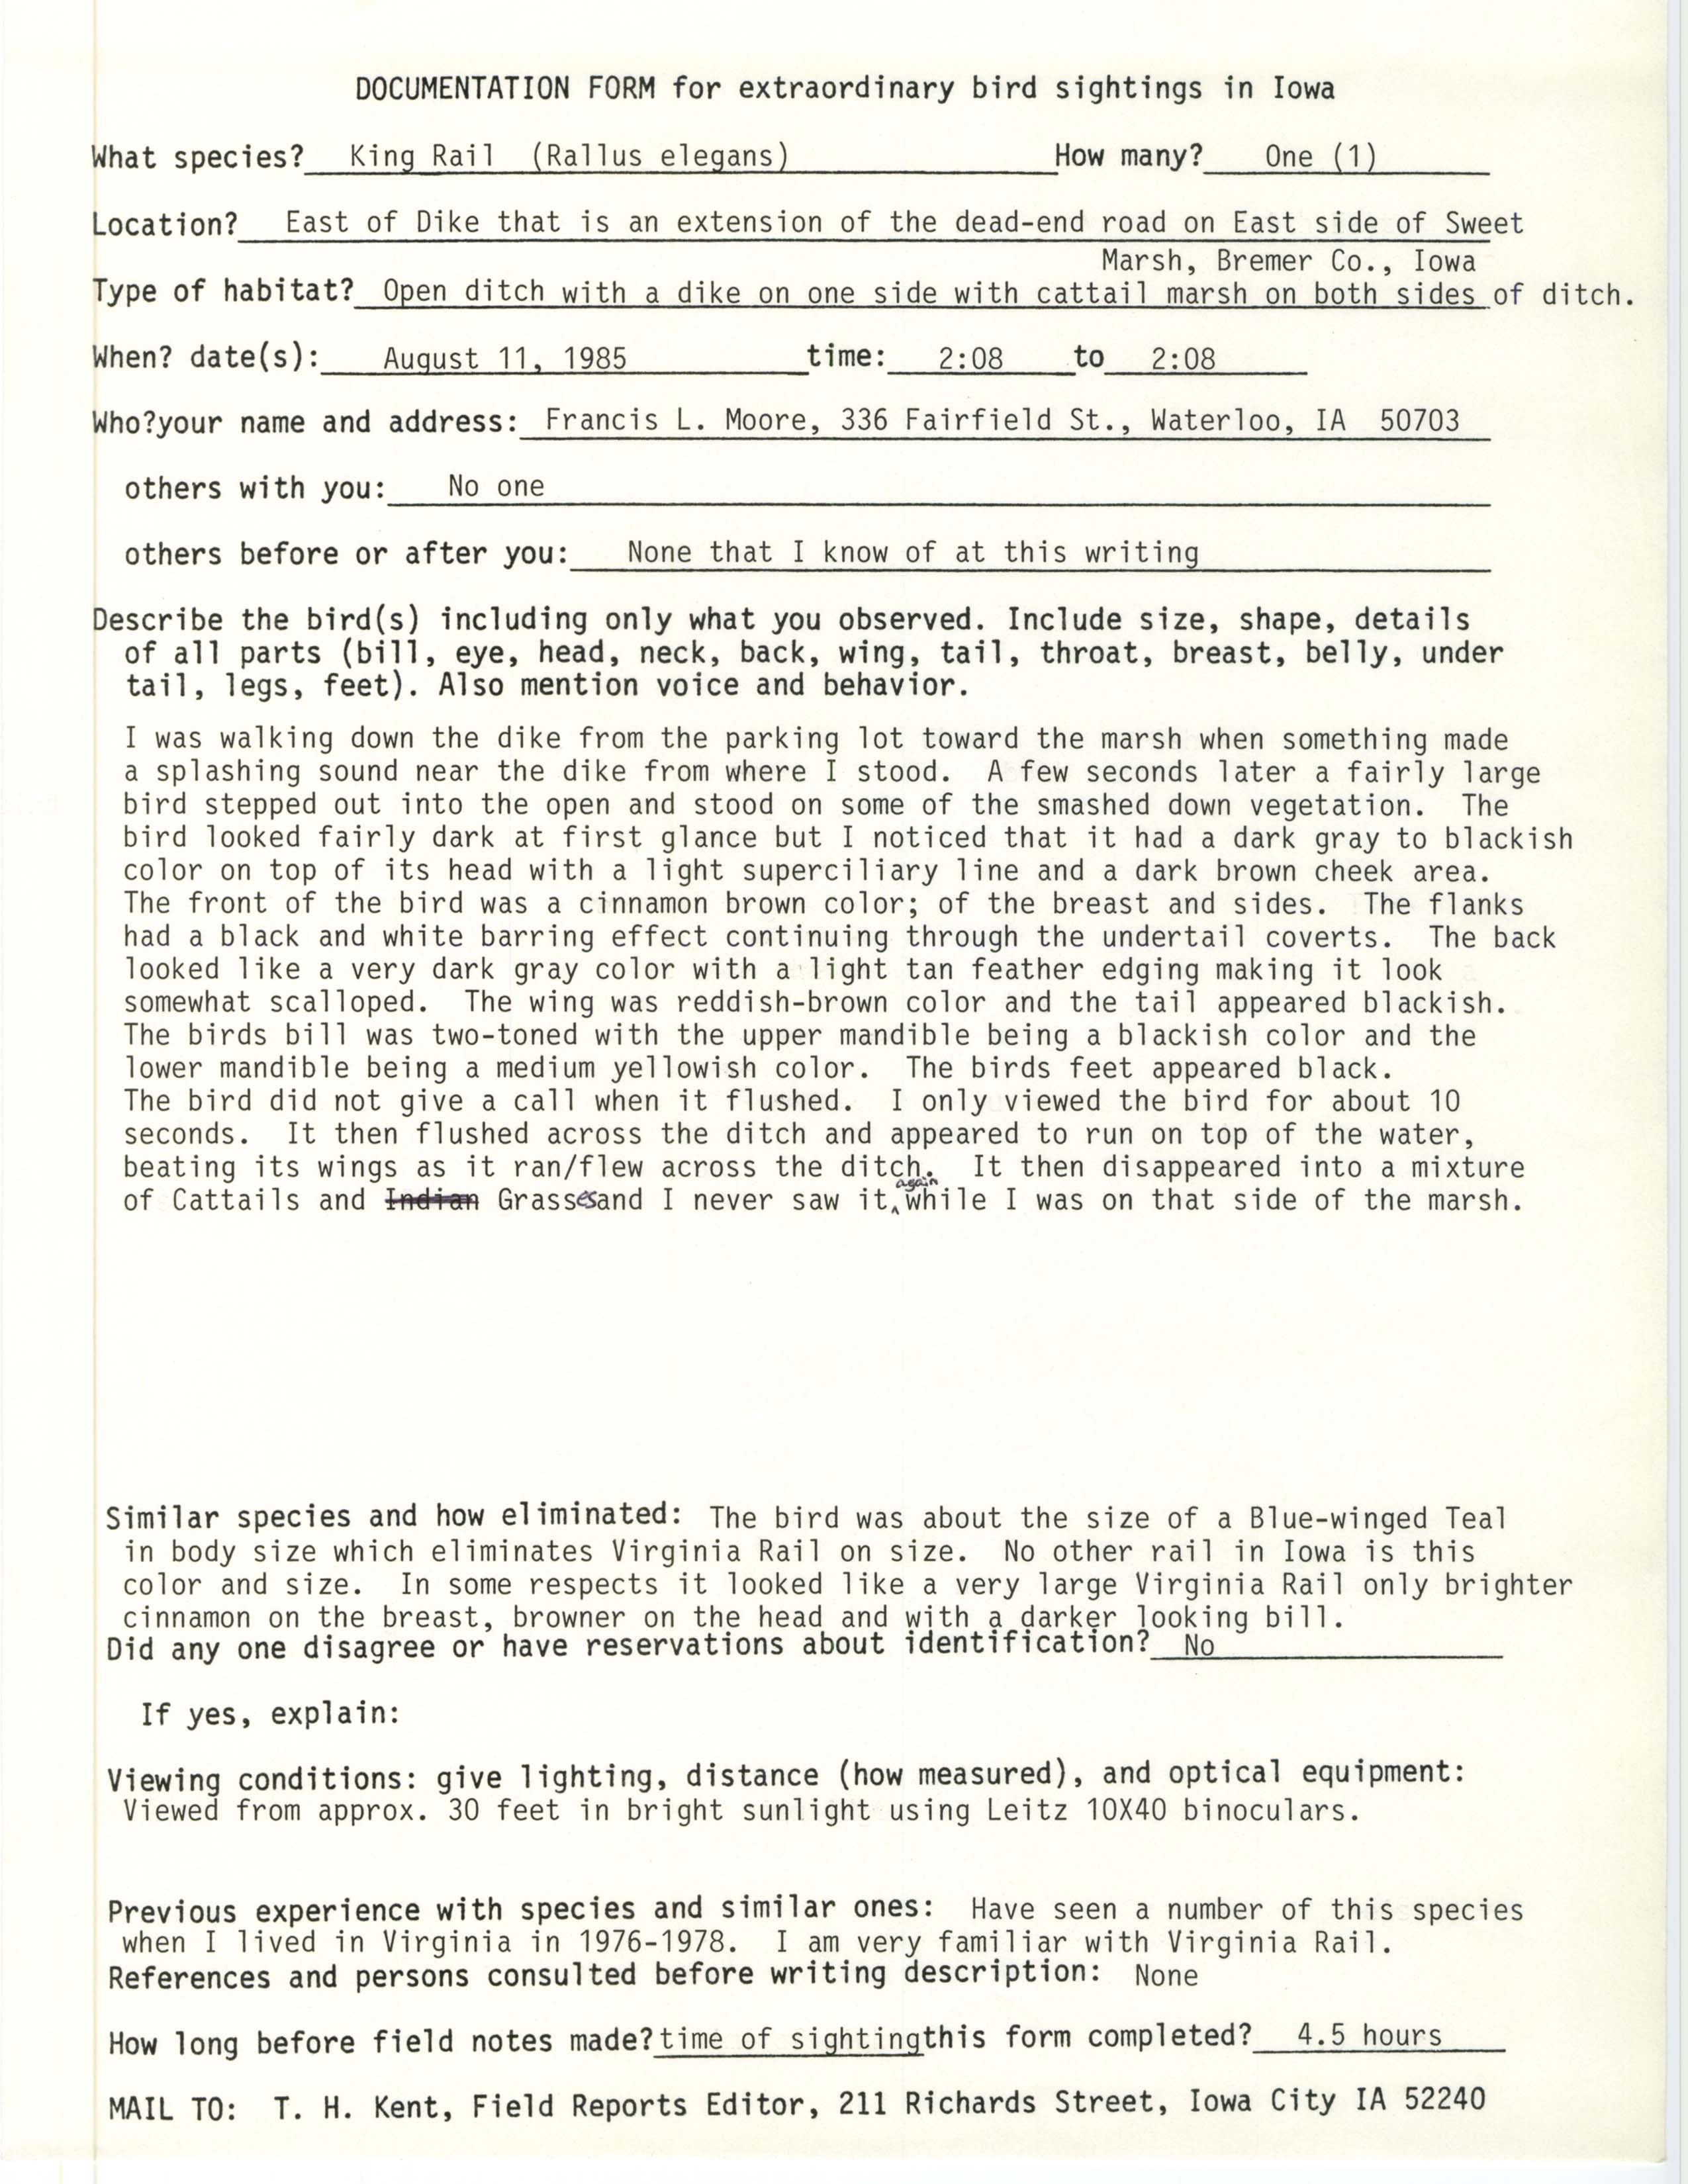 Rare bird documentation form for King Rail at Sweet Marsh, 1985